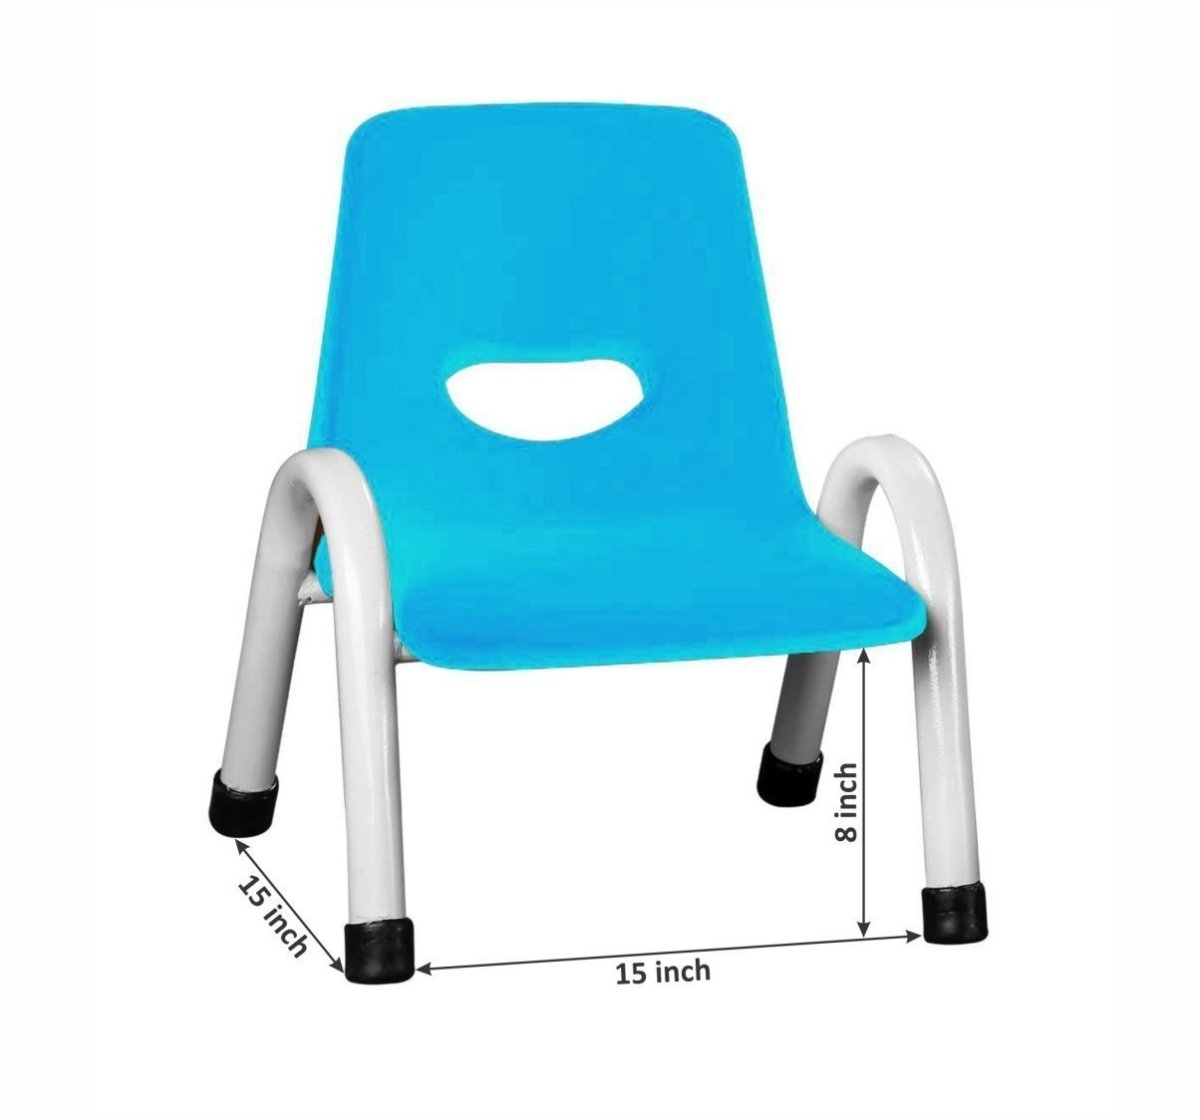 OK Play Cute Chair - Sky Blue & Ivory white - 9420A